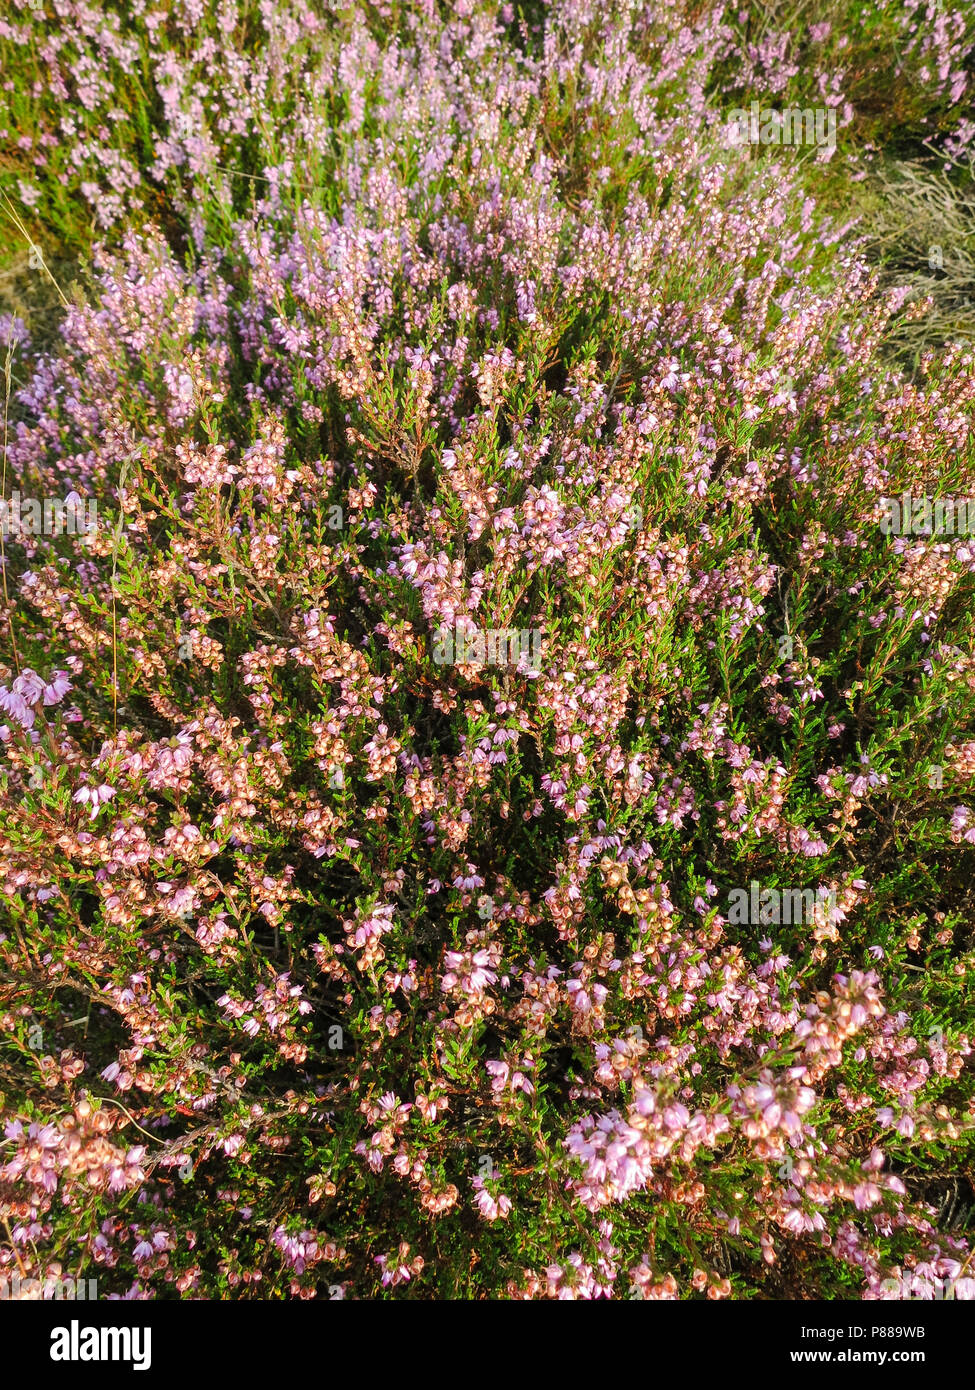 Flowering Heather at Nationaal park de Hoge Veluwe Stock Photo